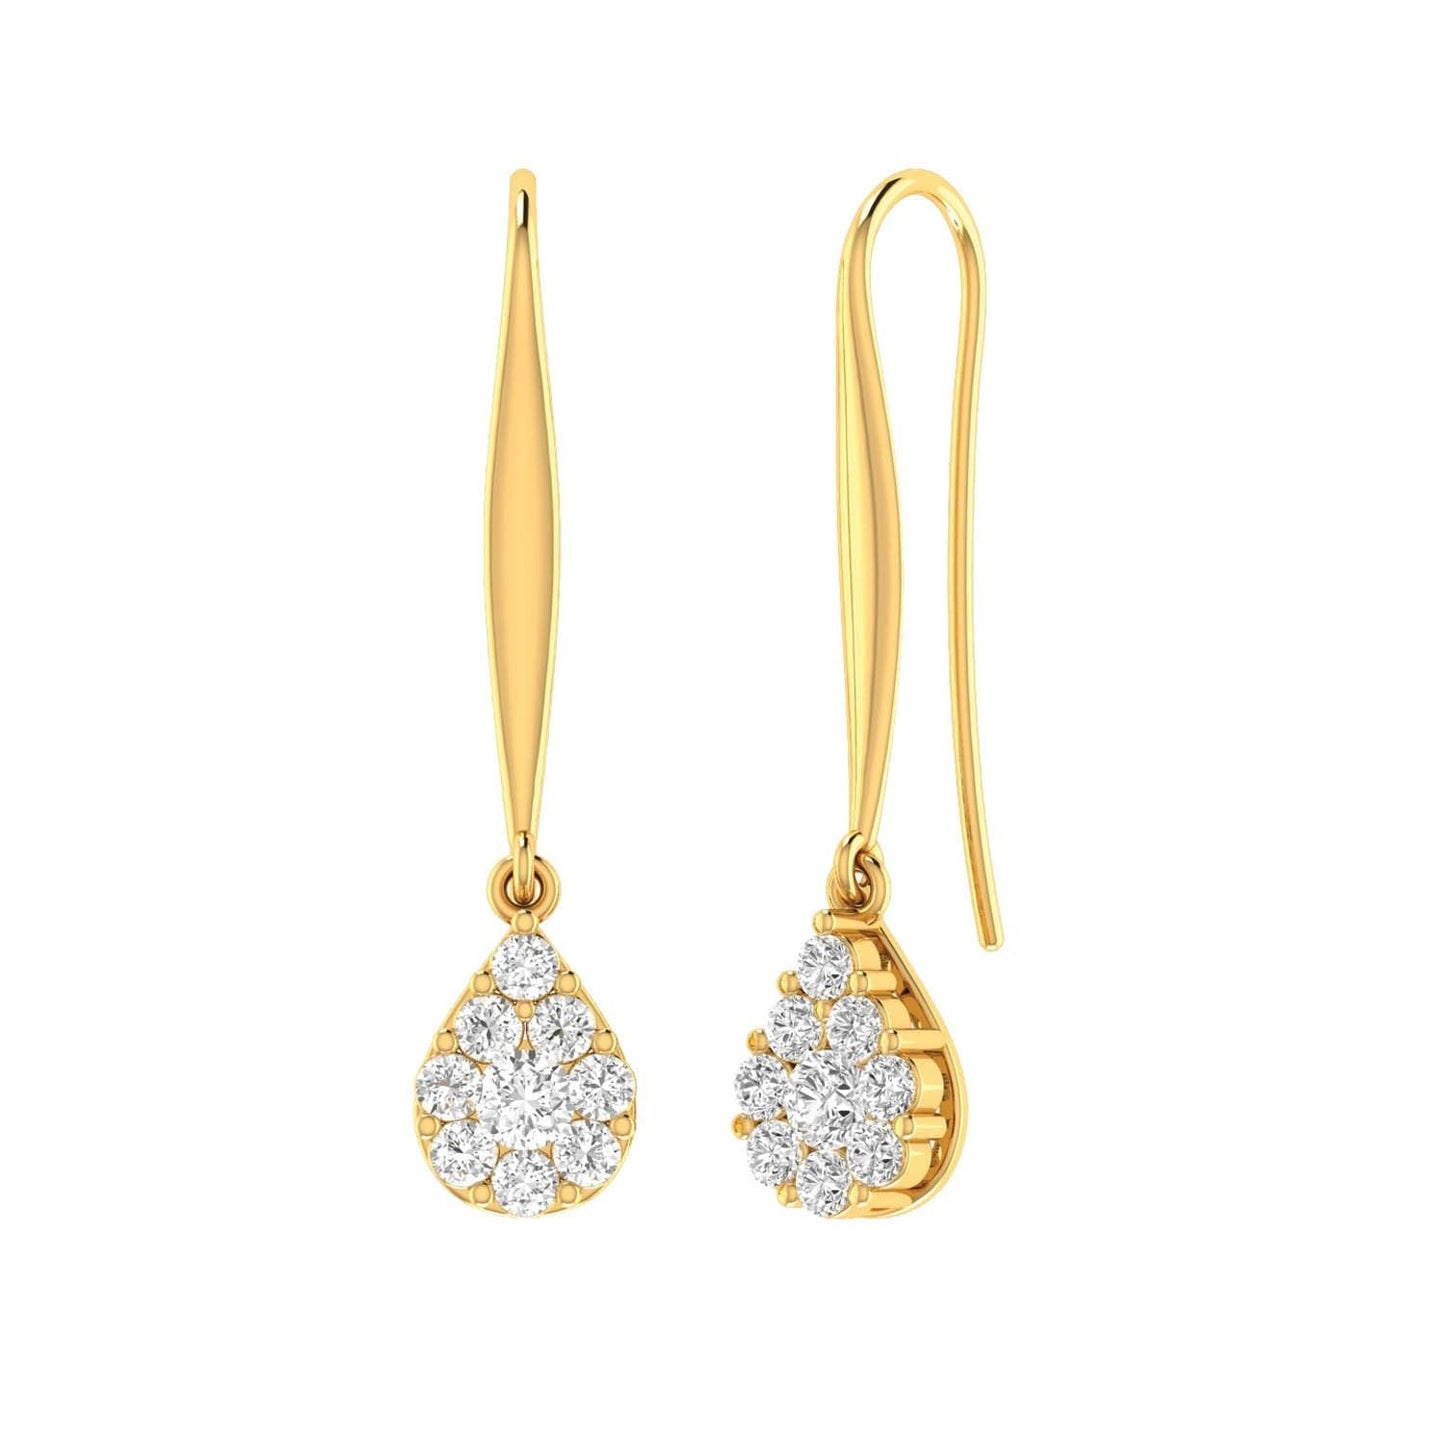 Tear Drop Hook Diamond Earrings with 1.00ct Diamonds in 9K Yellow Gold - 9YTDSH100GH